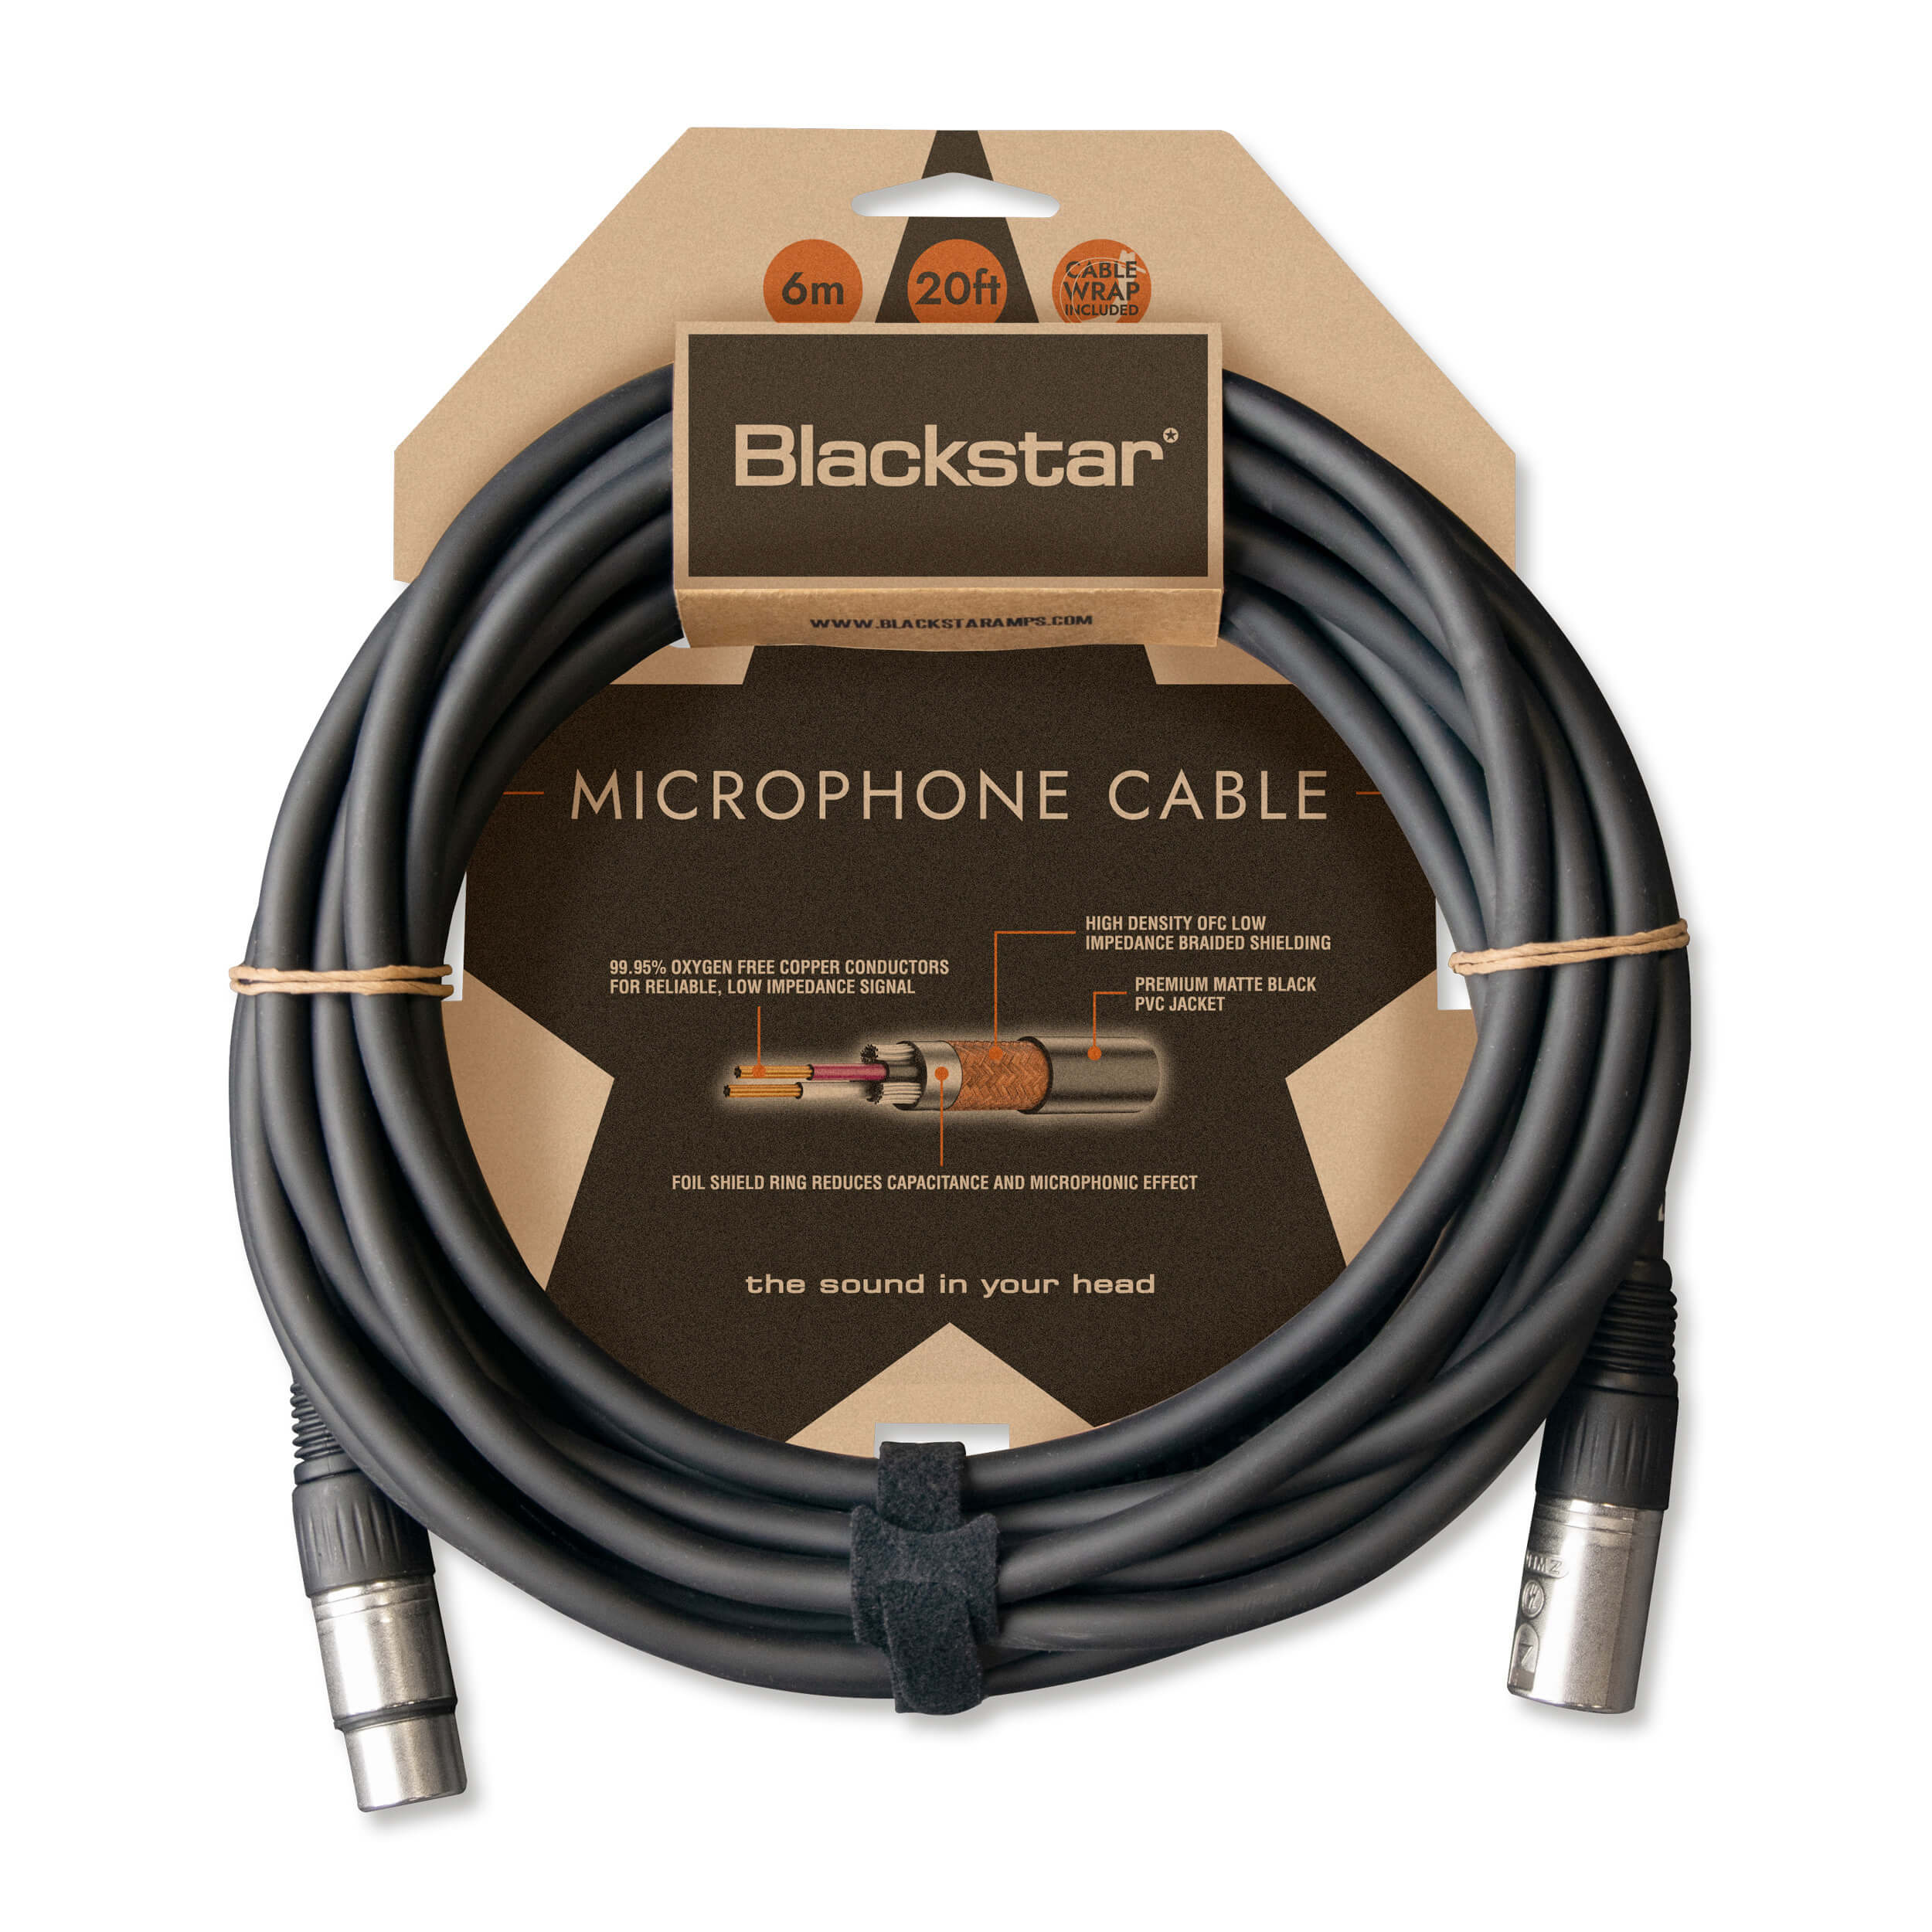 Blackstar Microphone Cable (6m)